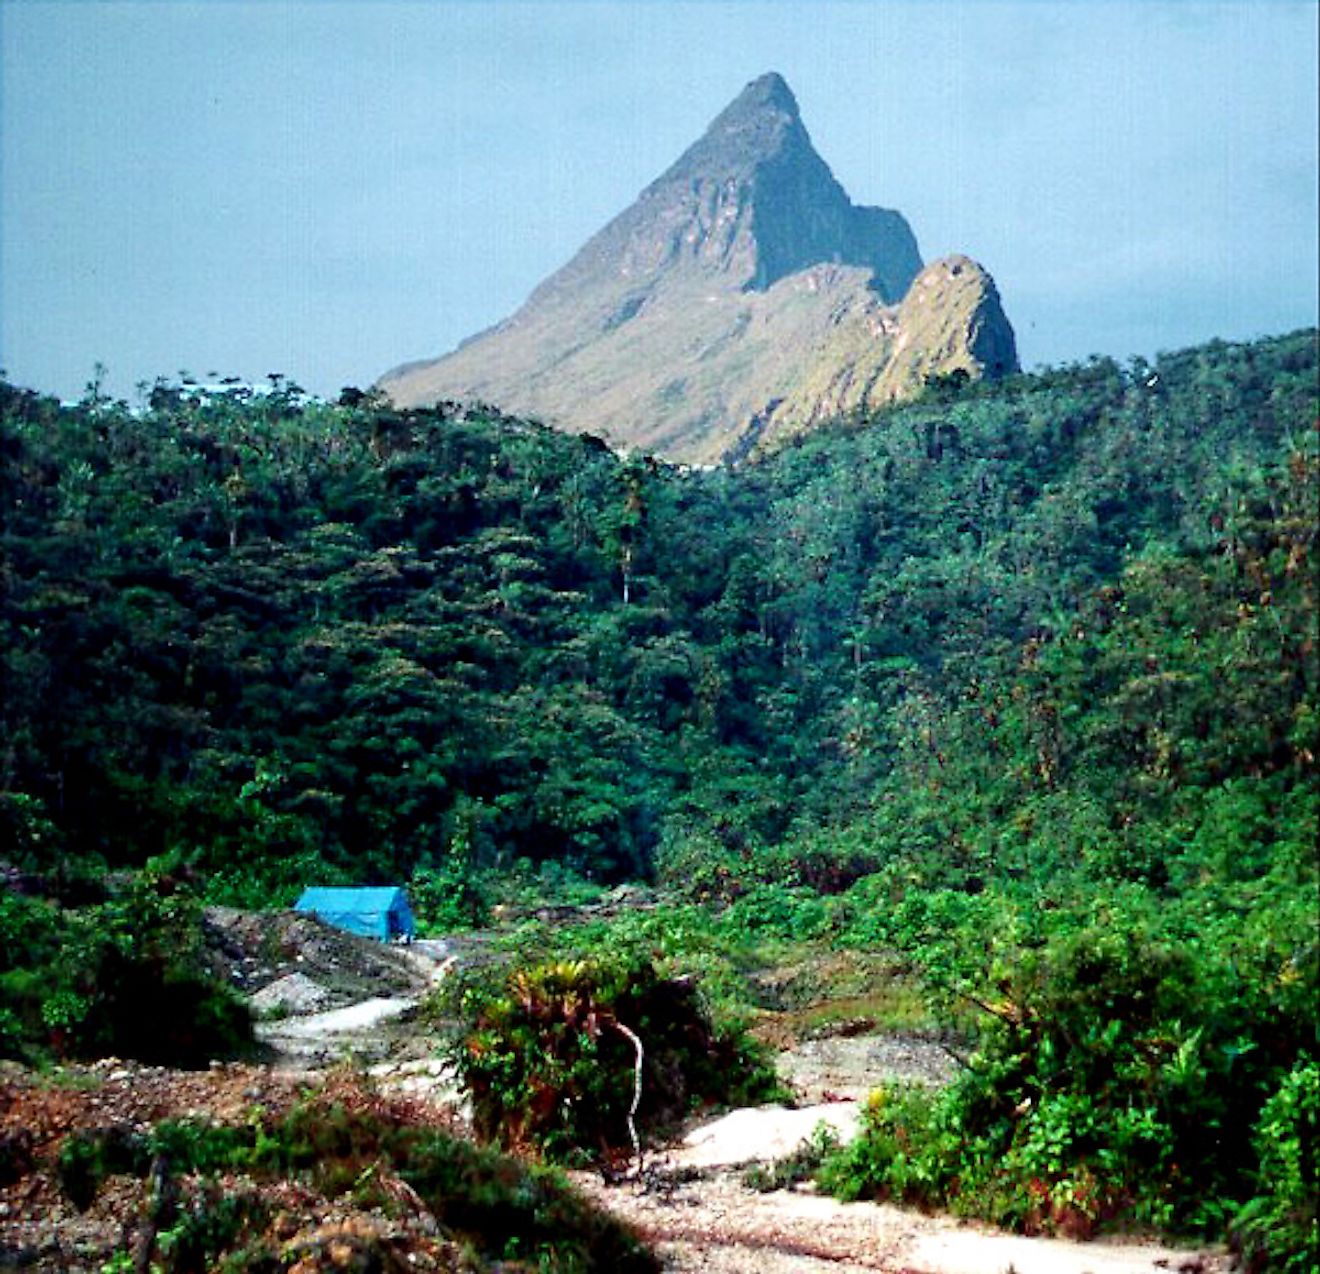 Pico da Neblina (Fog Peak) is the highest mountain in Brazil. Image credit: Robson Esteves Czaban/Wikimedia.org